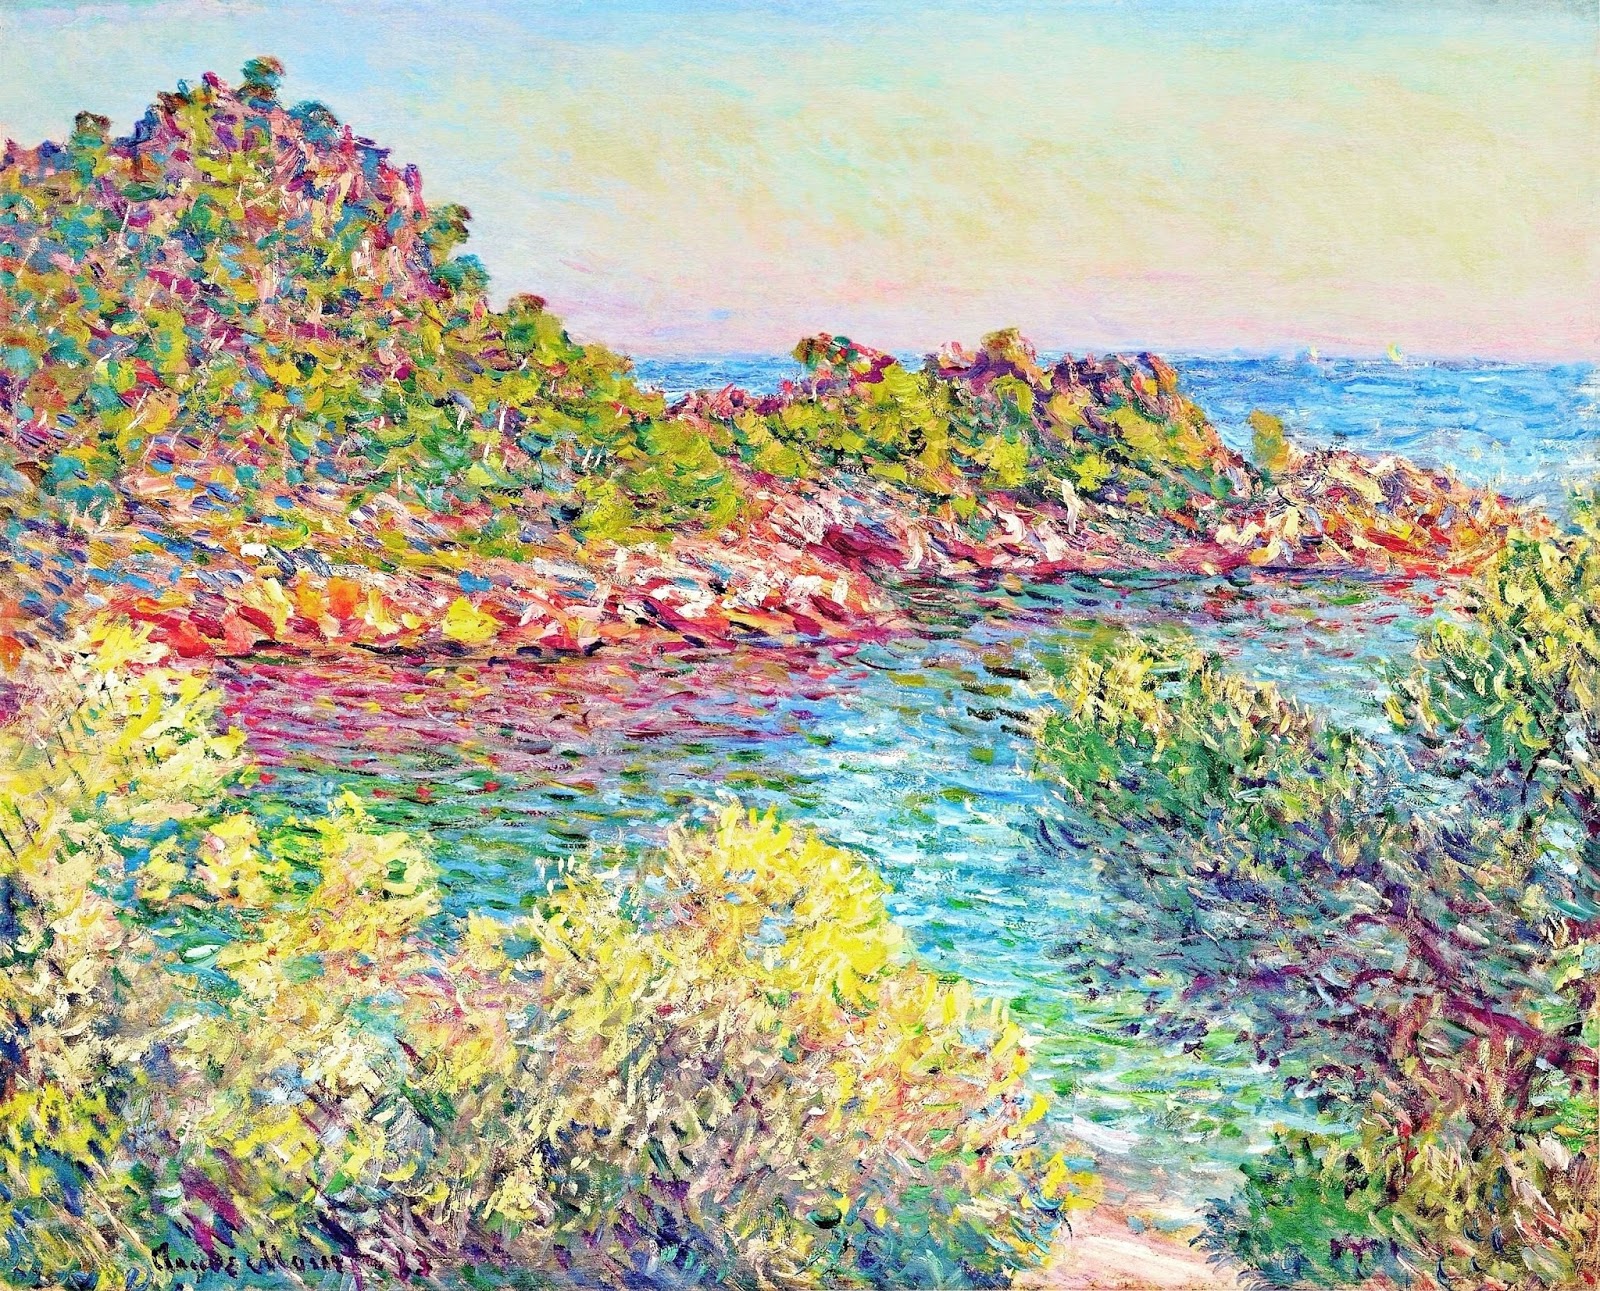 Claude+Monet-1840-1926 (396).jpg